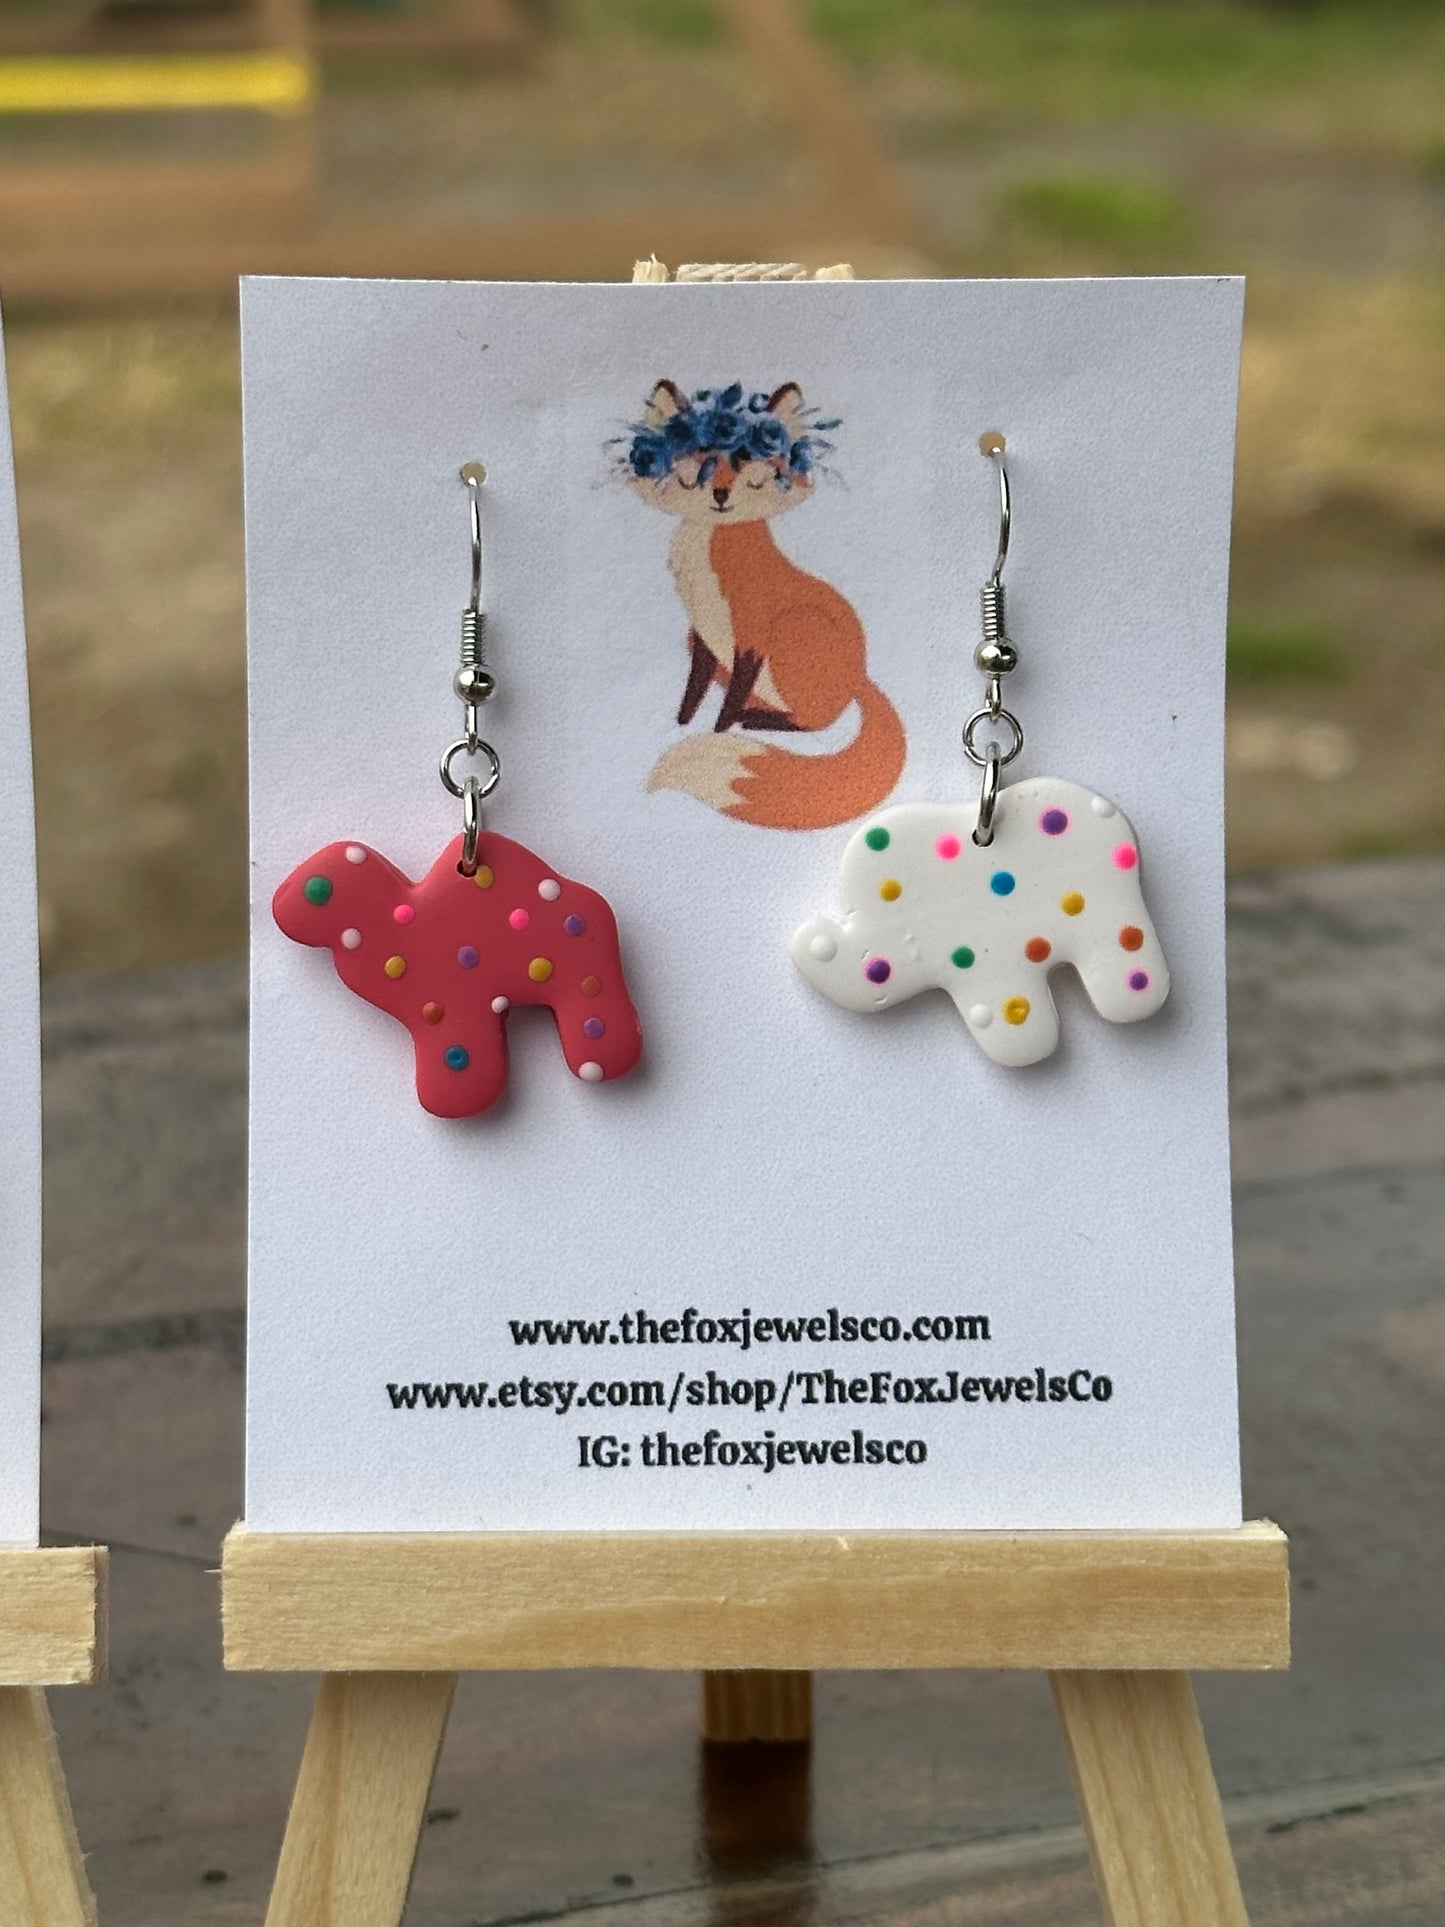 Circus Animals, Animal Crackers, Handmade, Handmade Jewelry, Jewelry, Earrings, Fun Earrings, Unique, Gifts, Gifts for her, Gifts for friends, Gifts for mom